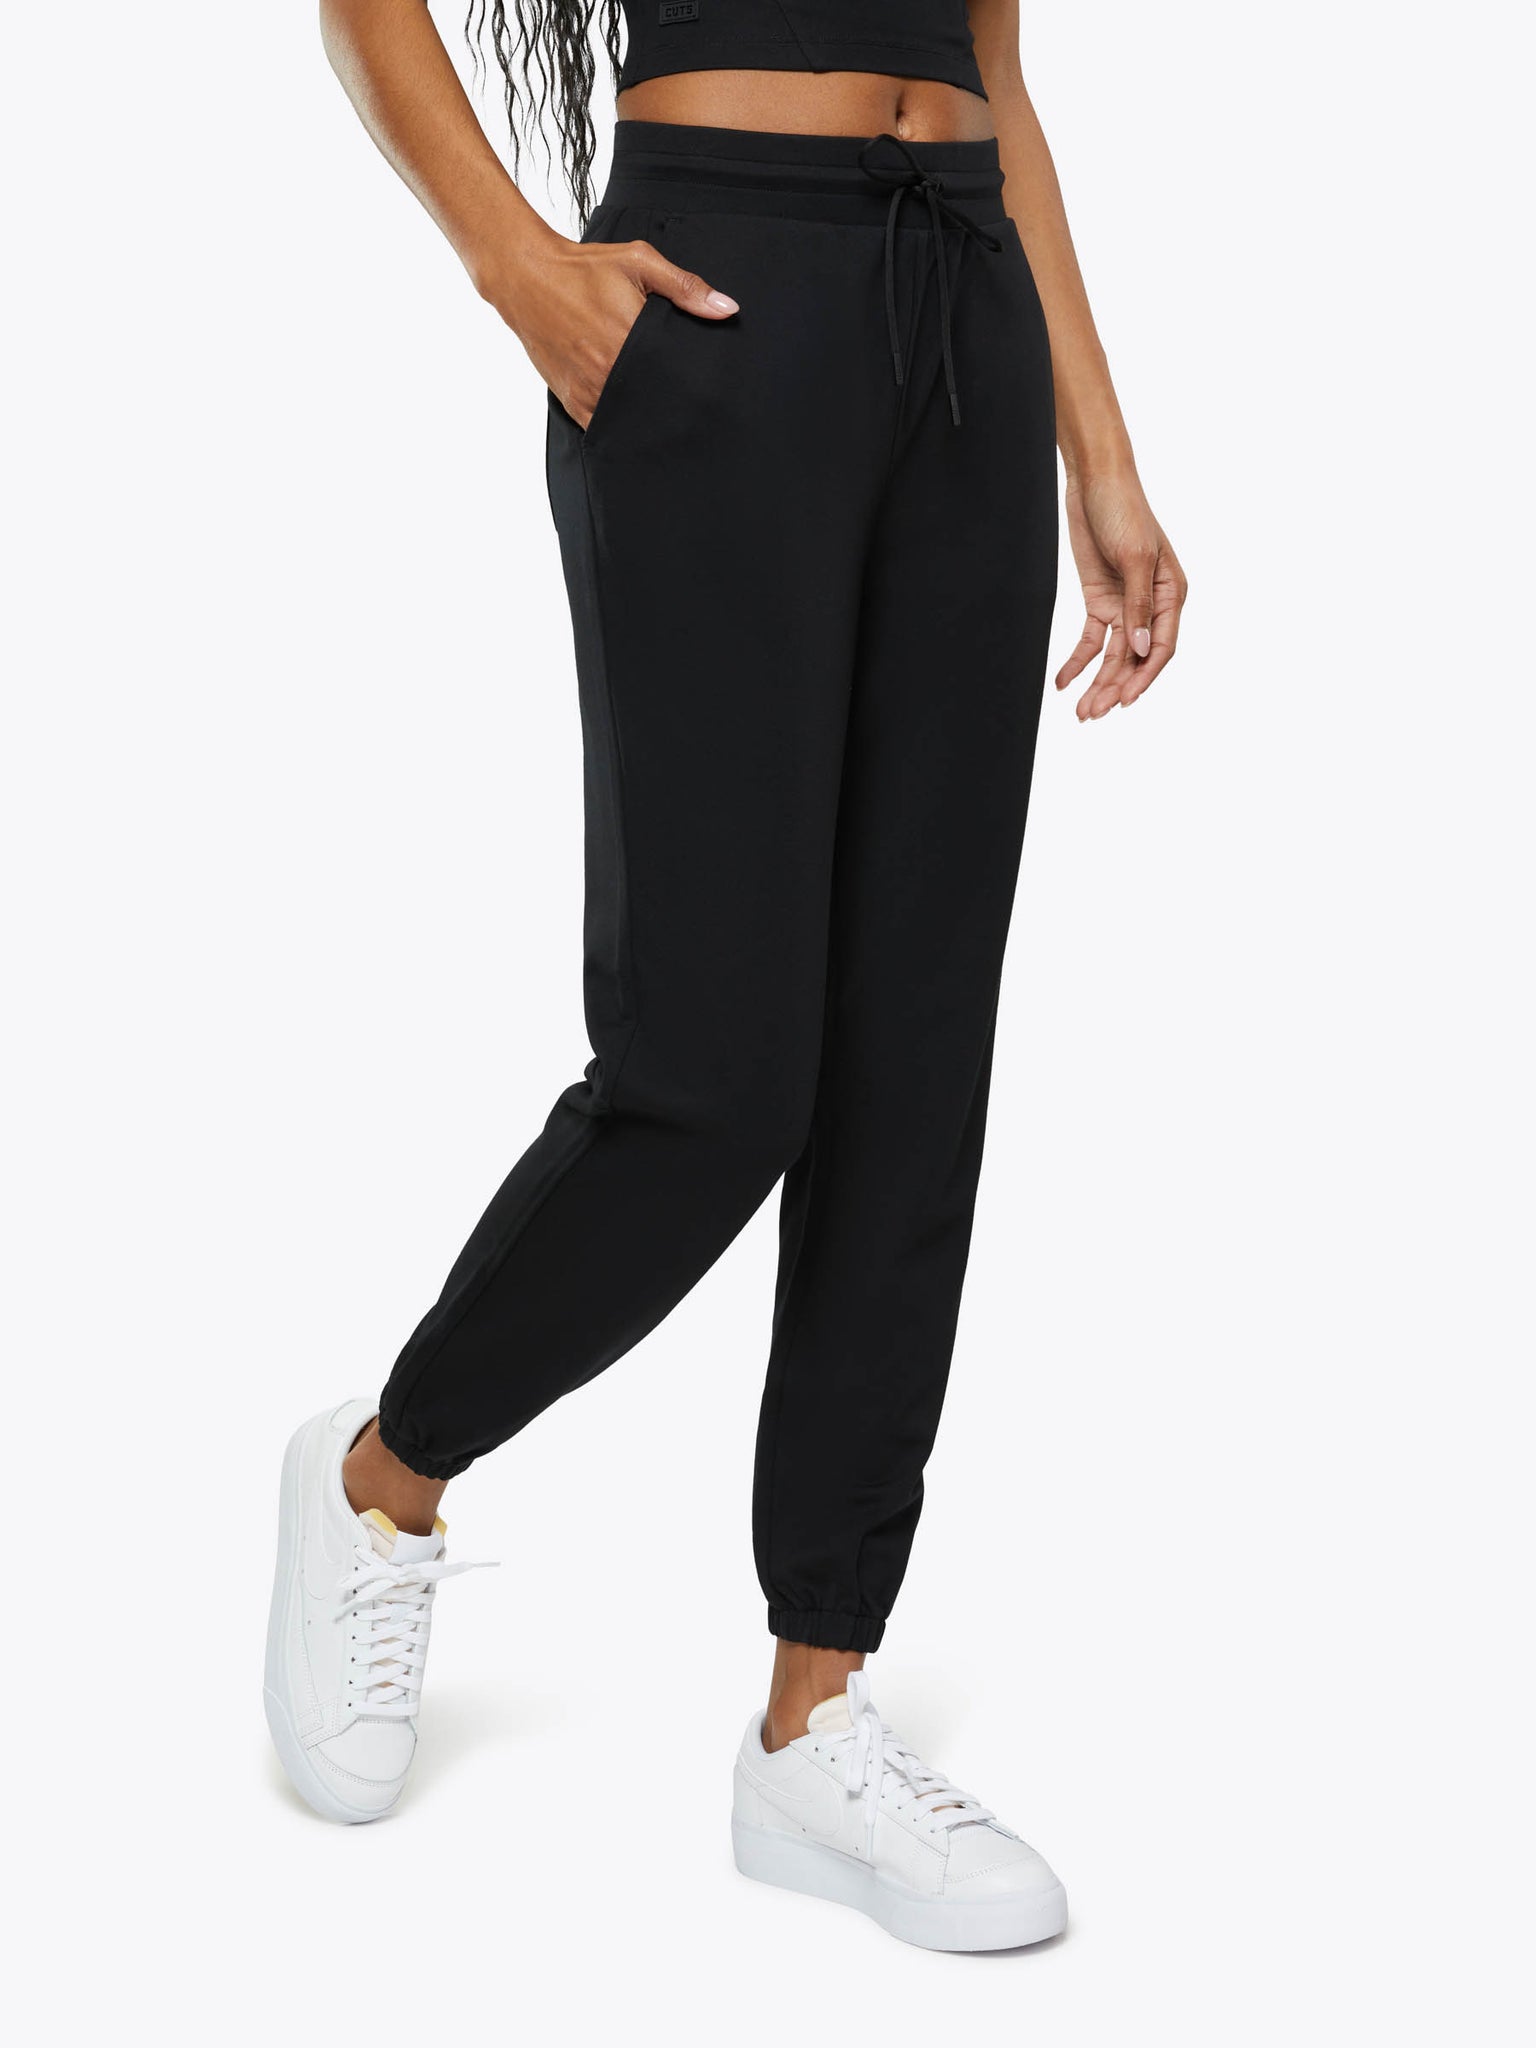 Nike Size XS S M Women's Sportswear Jersey Capri Pants Joggers